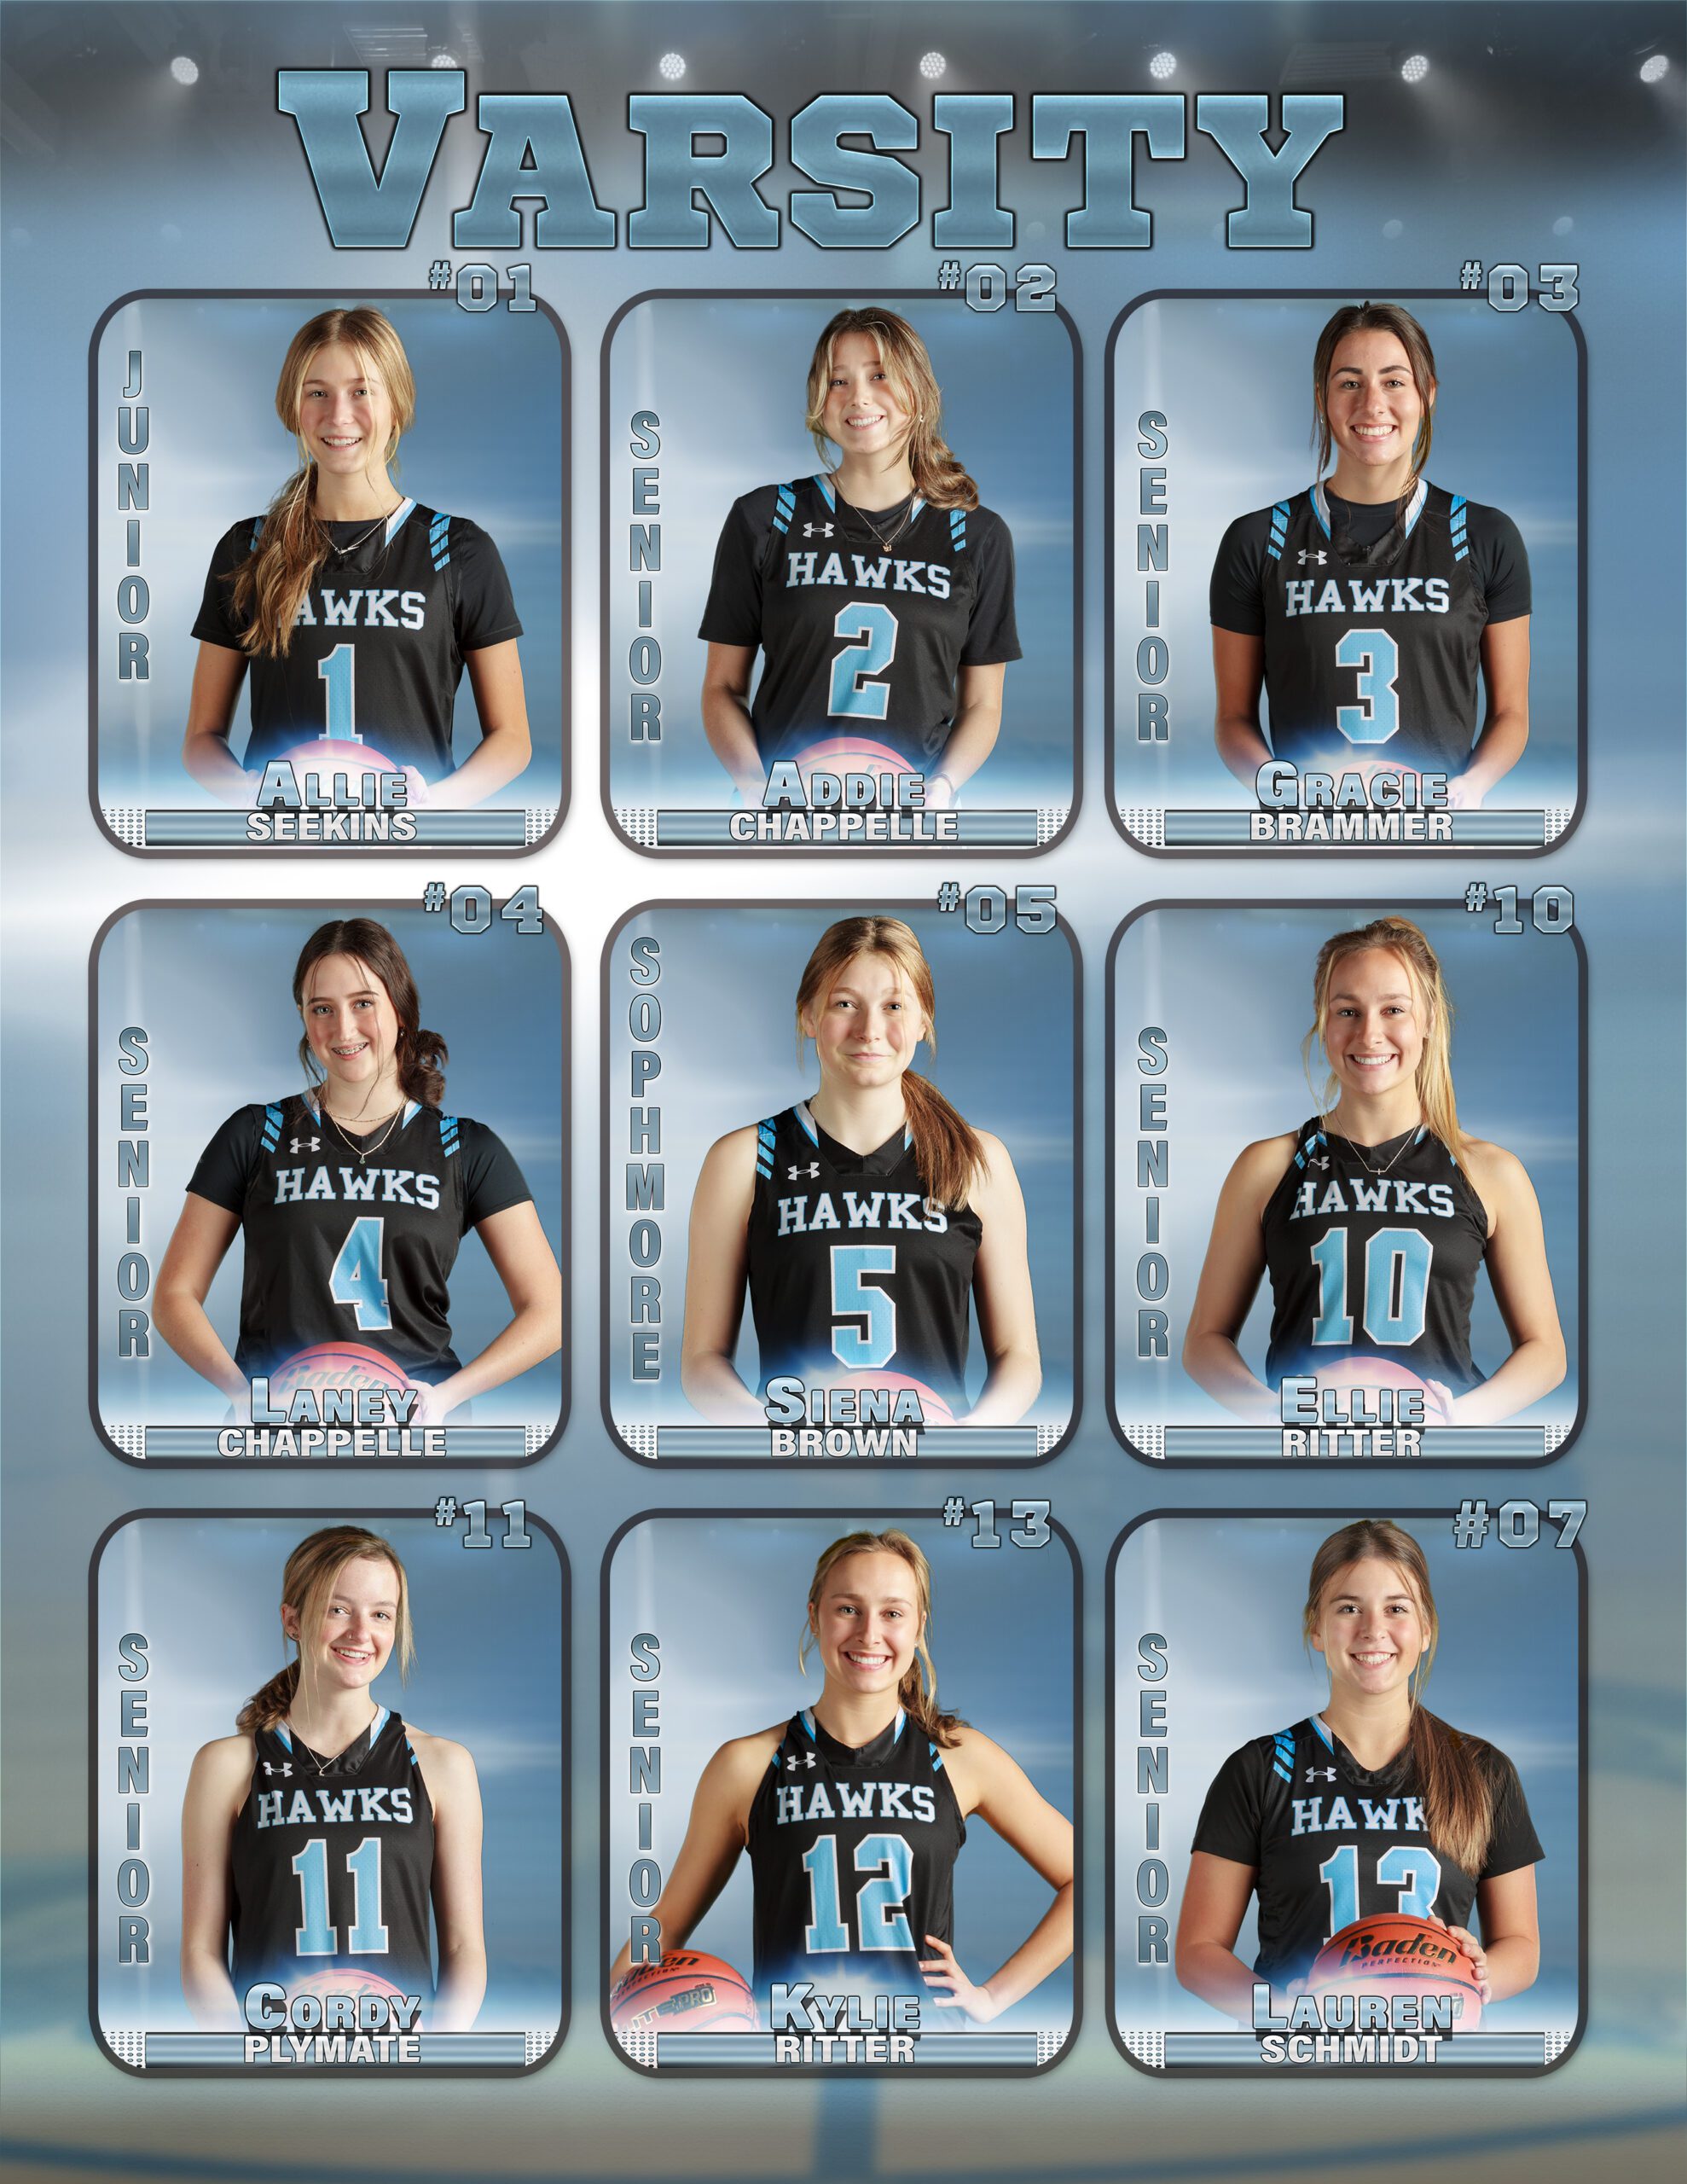 Team photo for the Hawks Highschool ladies basketball team